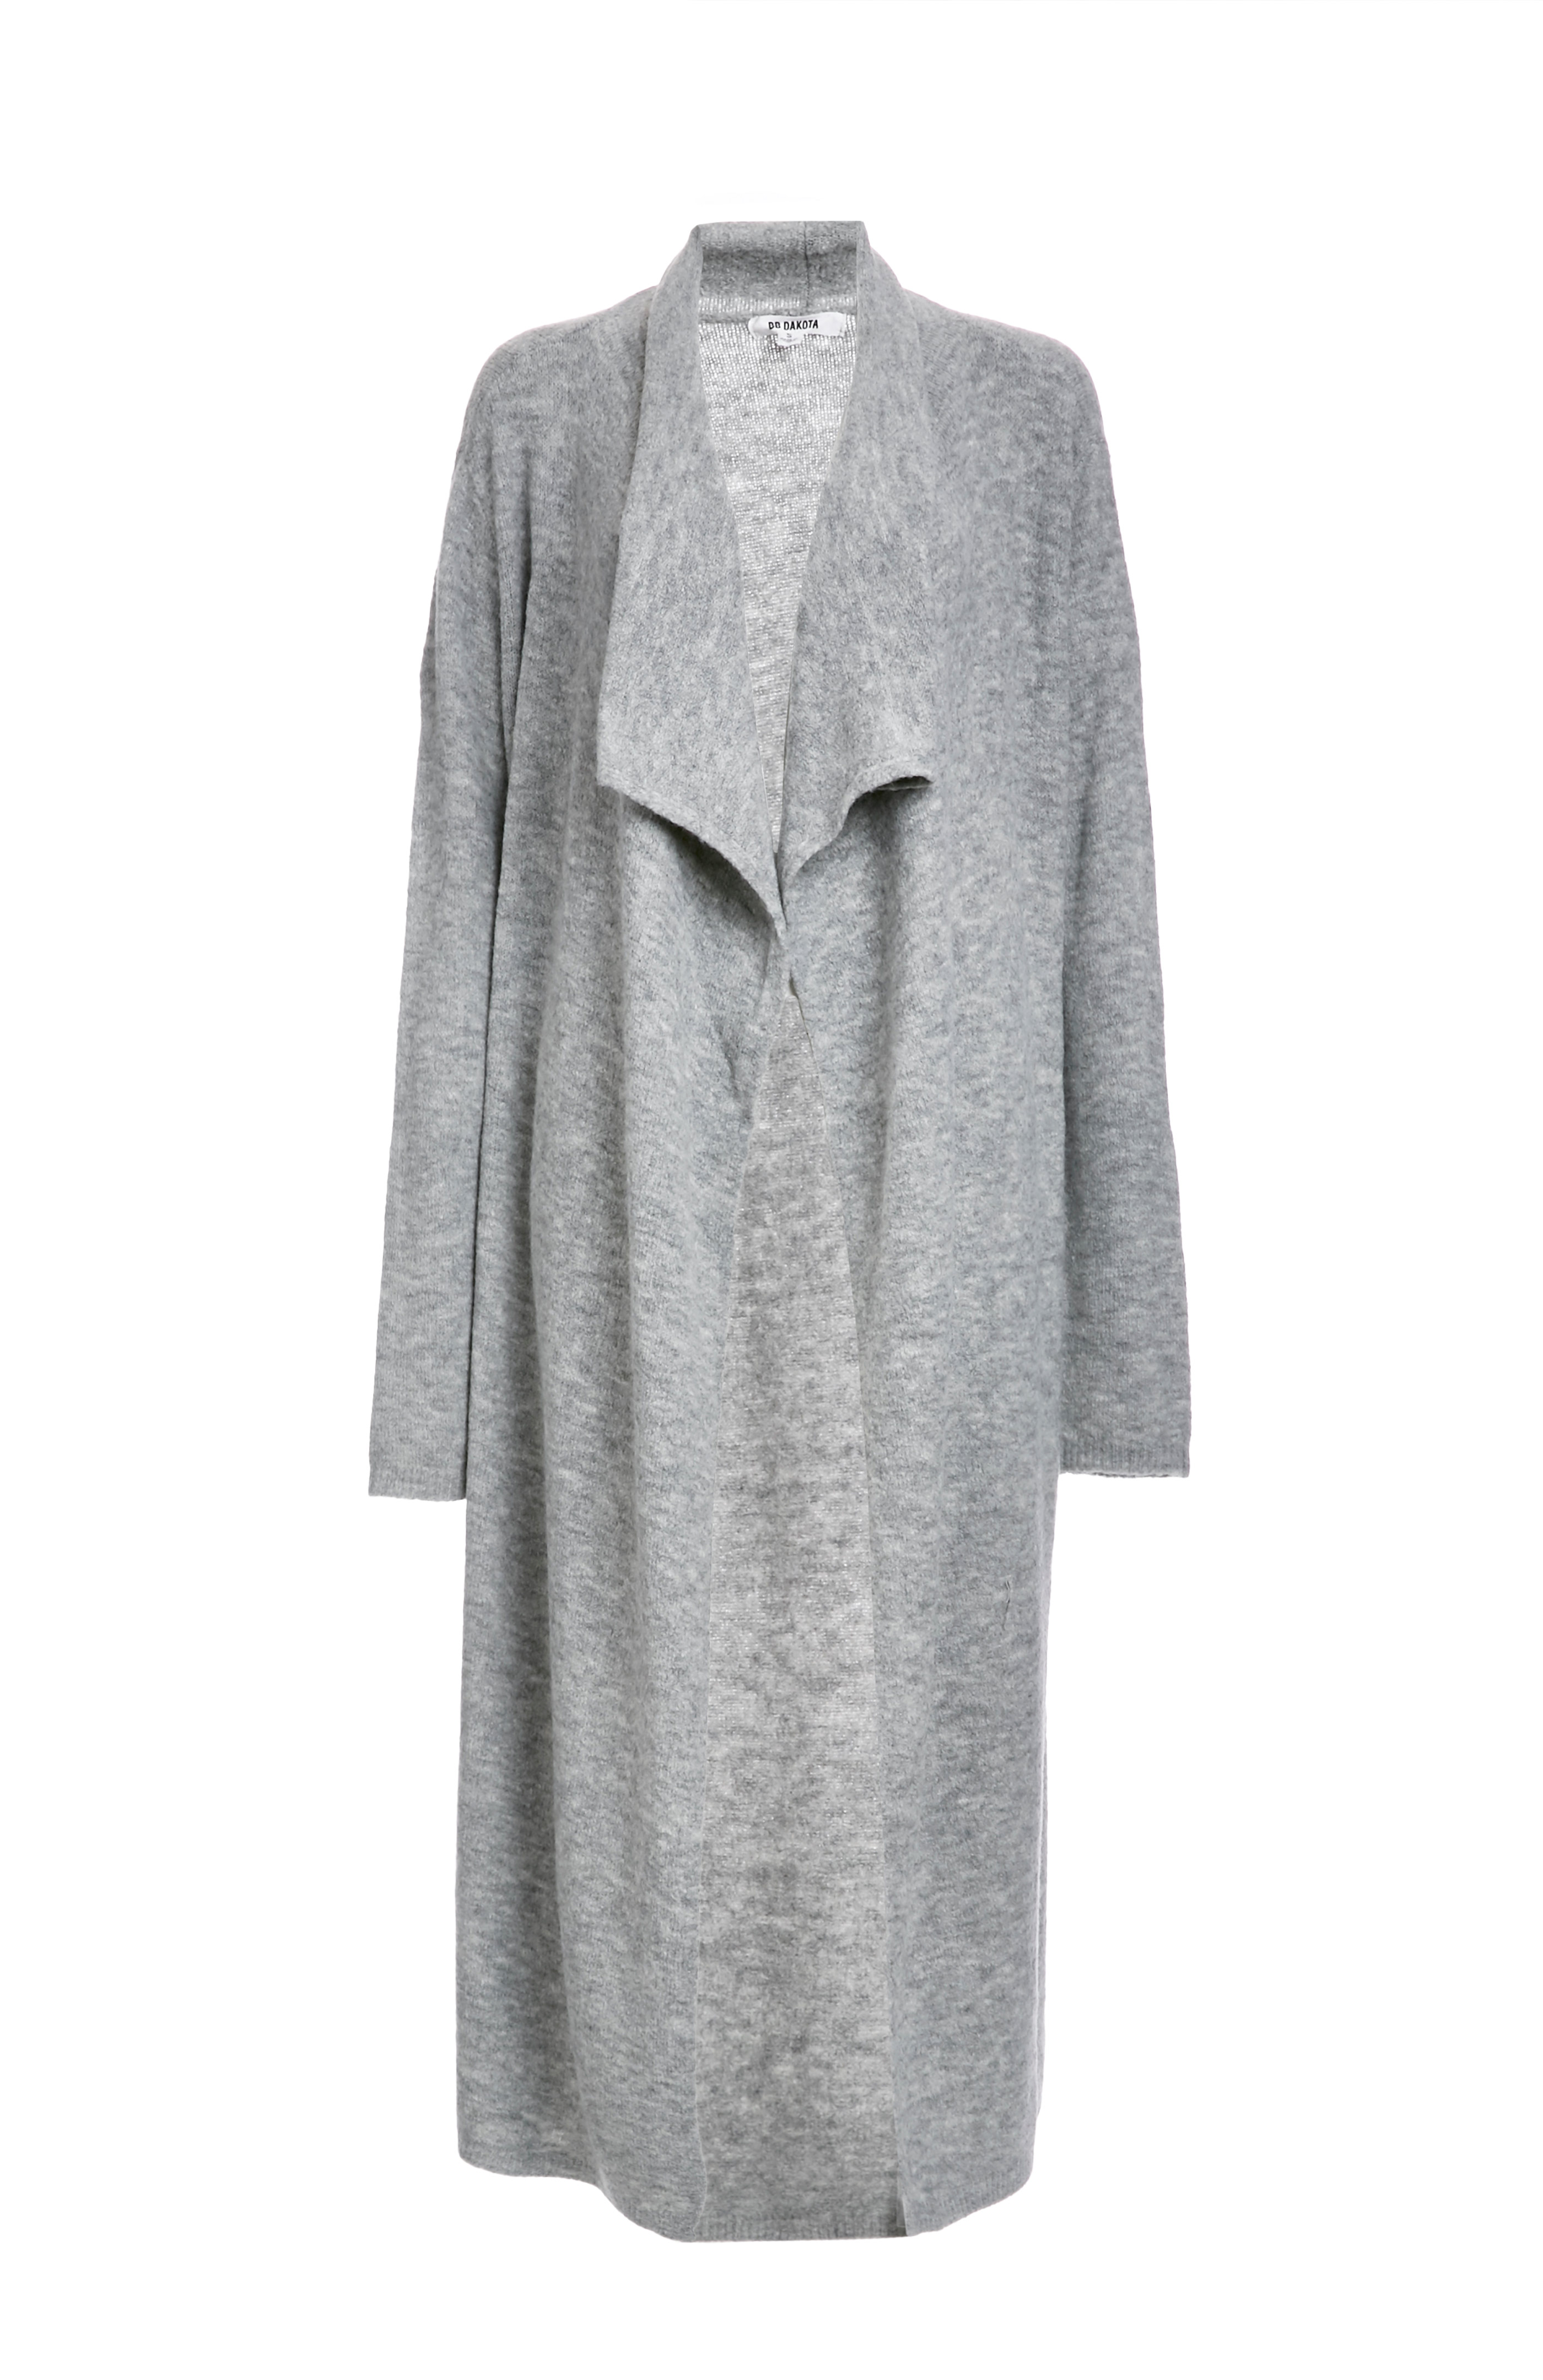 BB Dakota Tebbetha Soft Knit Long Cardigan in Grey | DAILYLOOK